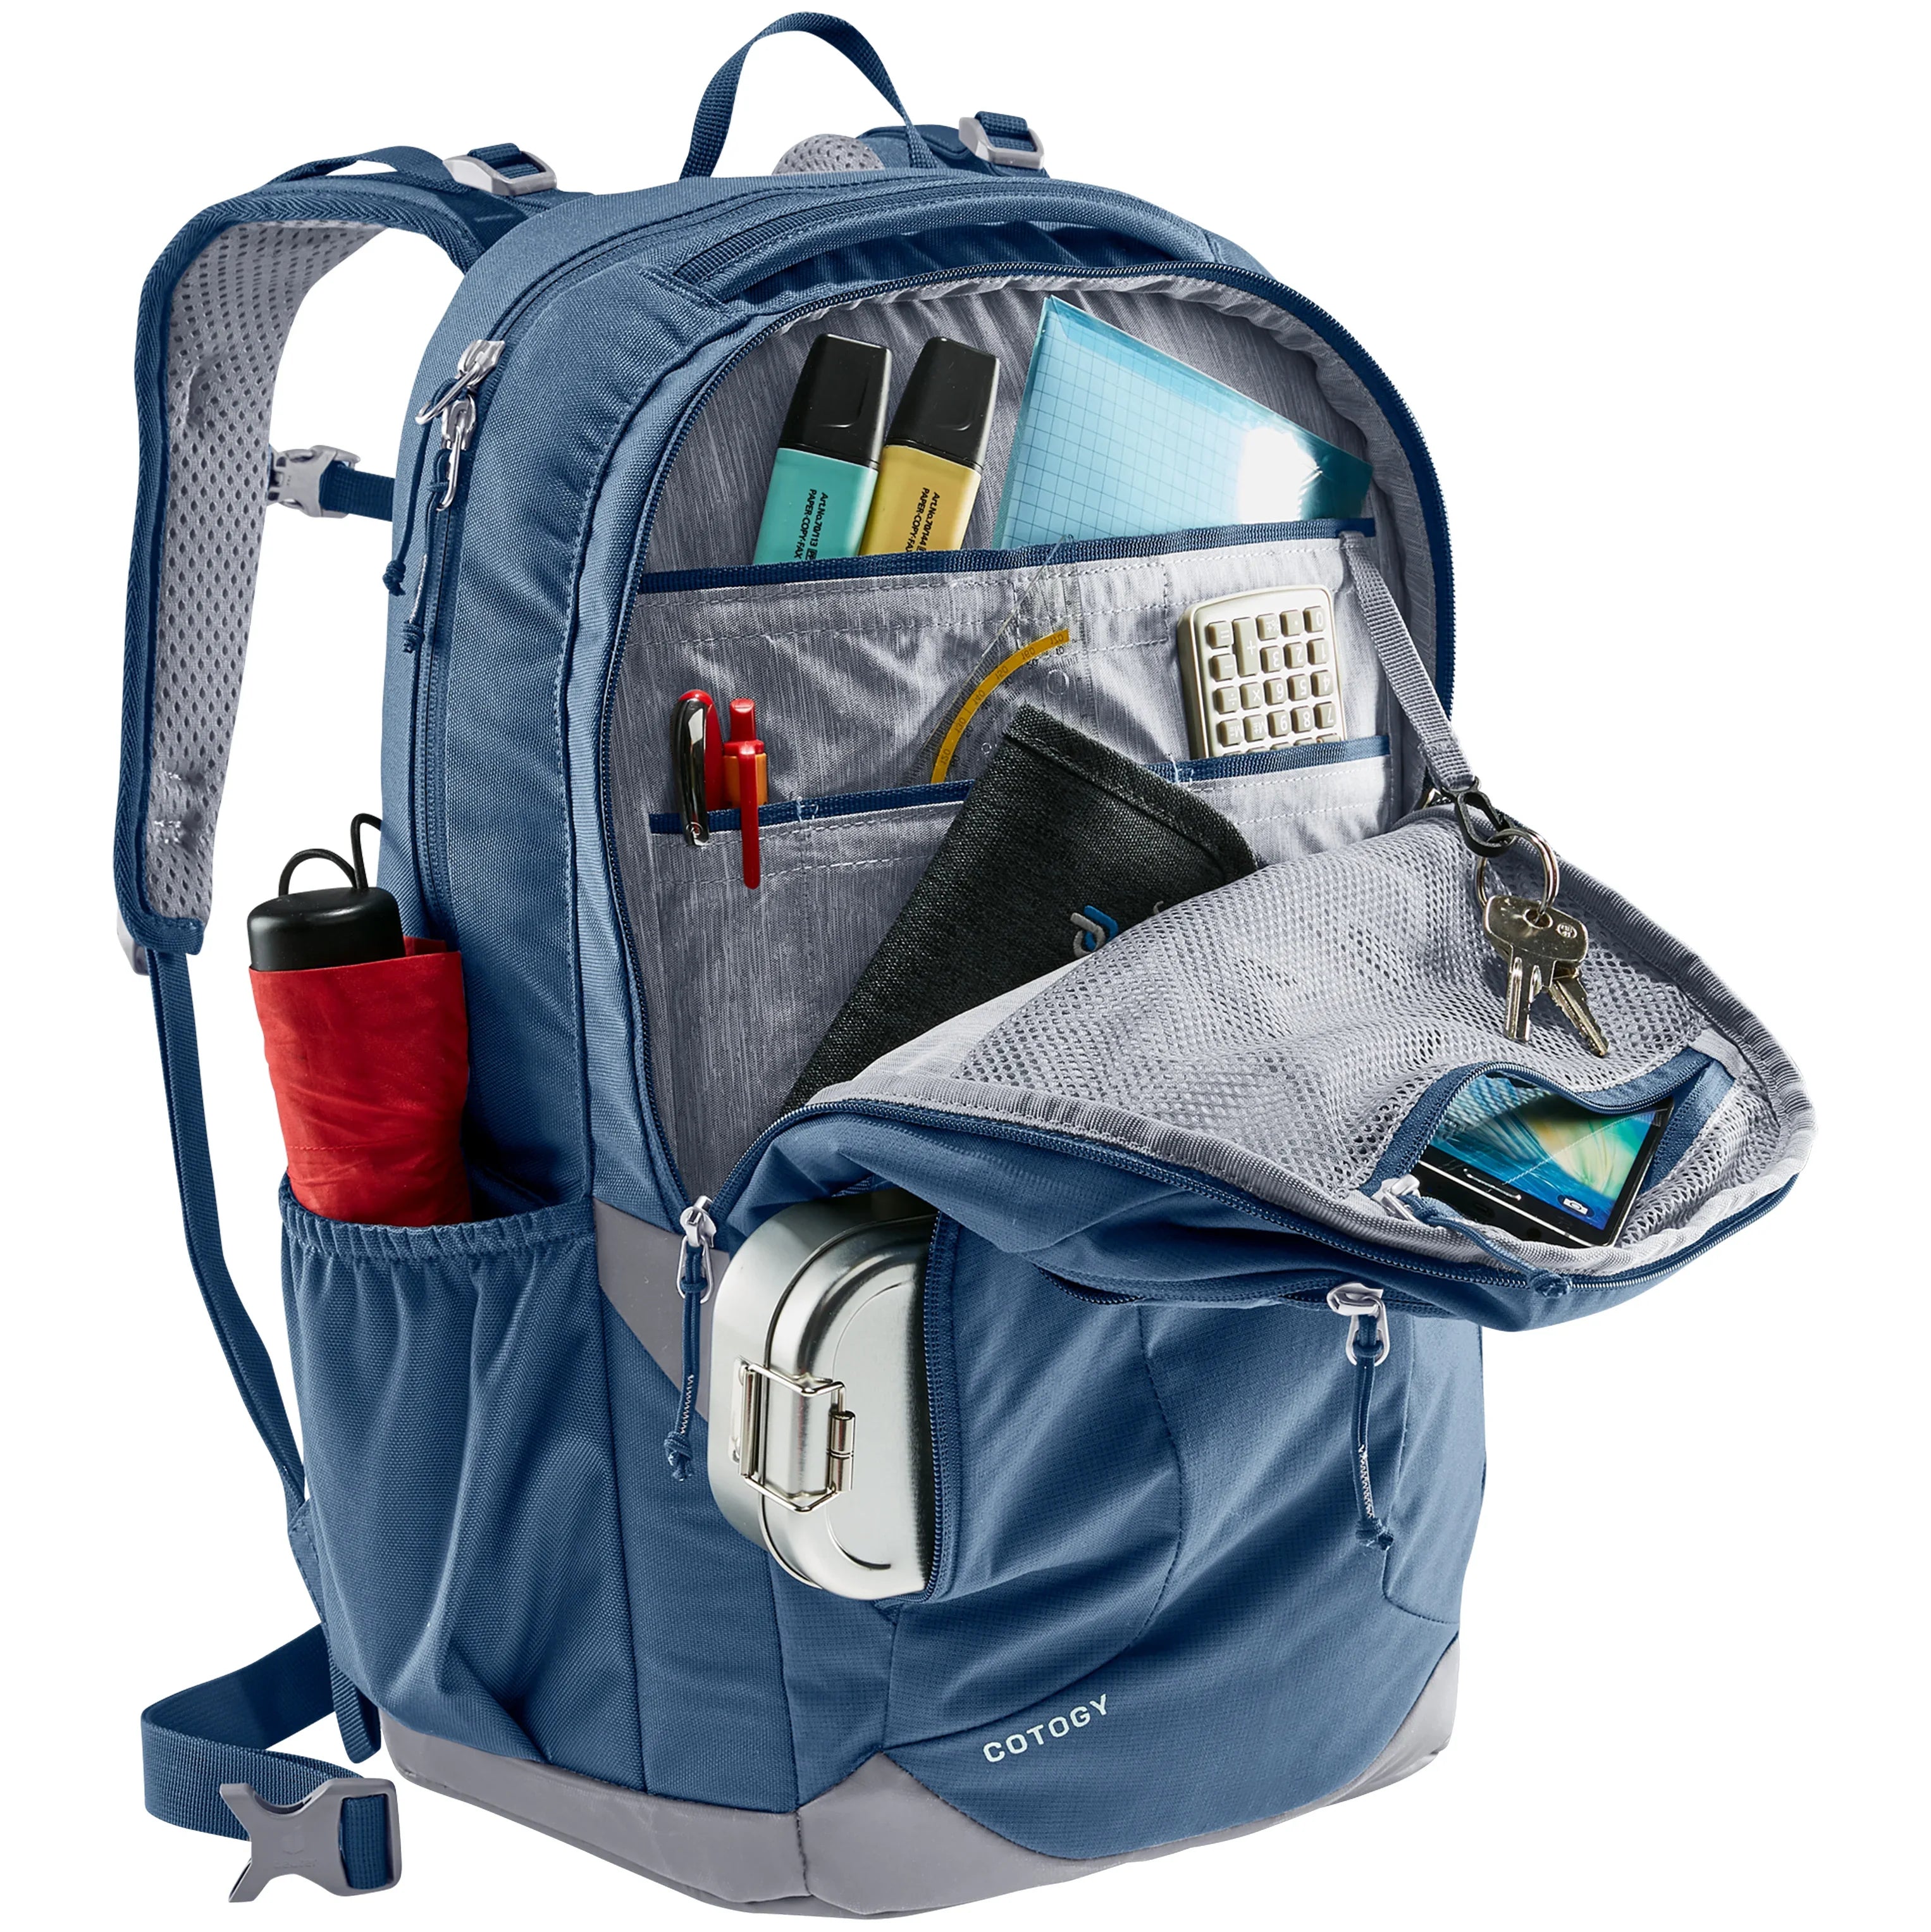 Deuter Daypack Cotogy school backpack 46 cm - Black